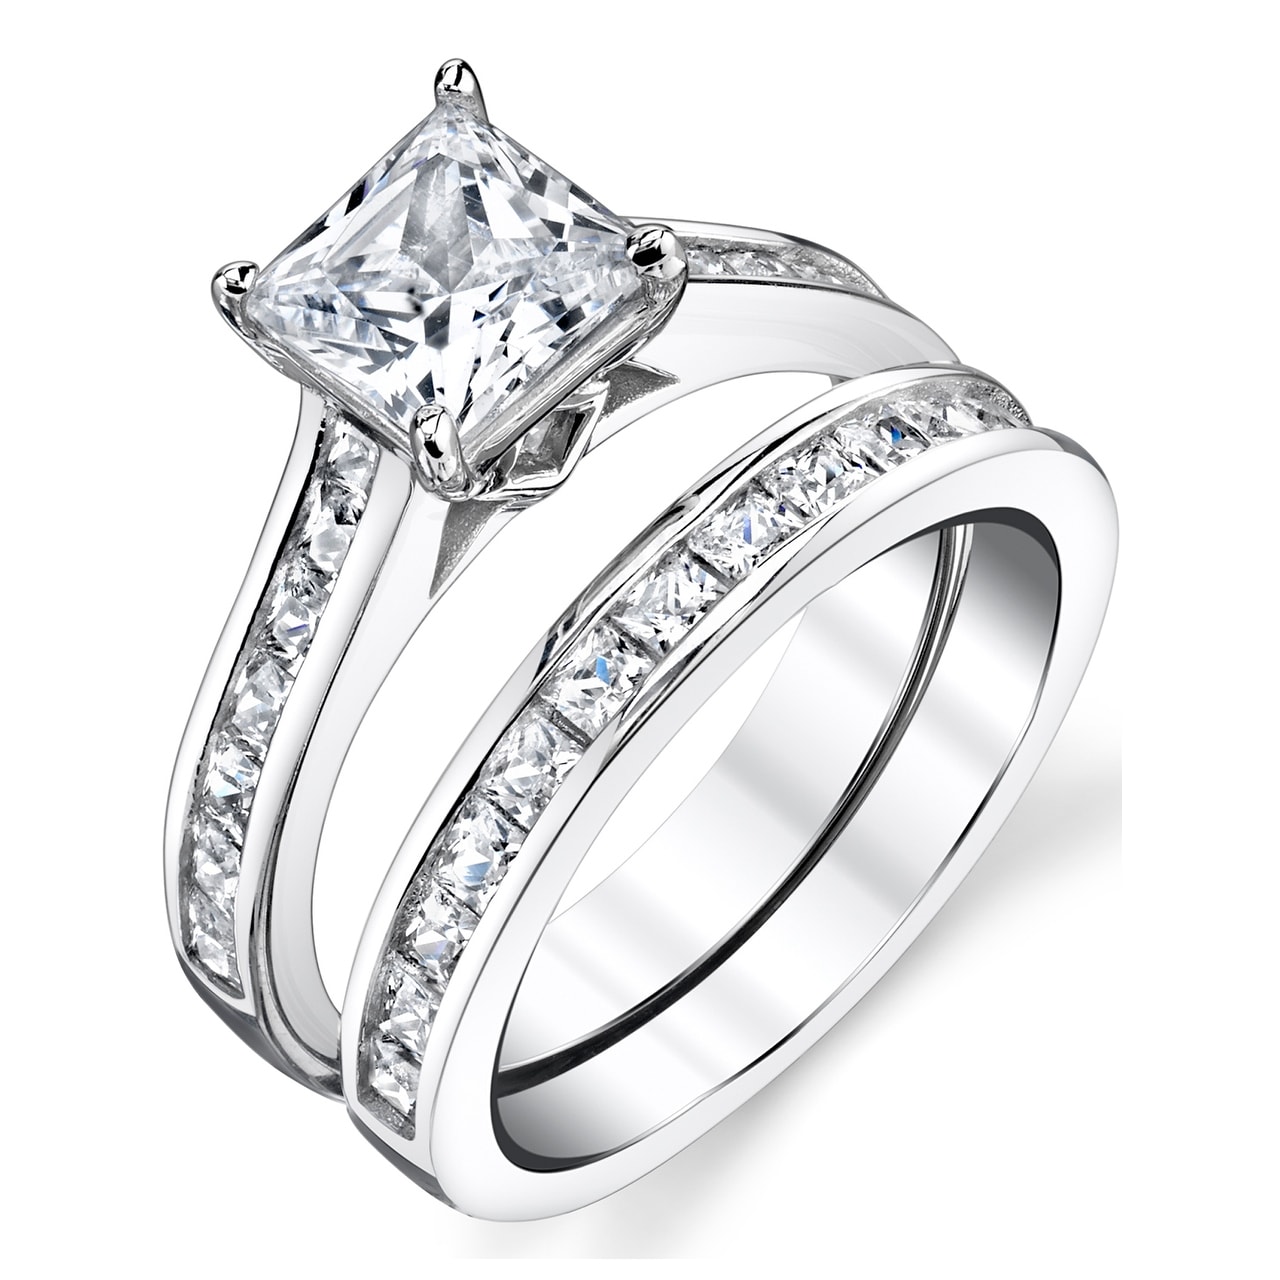 GuqiGuli 925 Solid Sterling Silver Bridal Wedding Band Engagement Ring Sets with Cushion and Princess Cut Cubic Zirconia